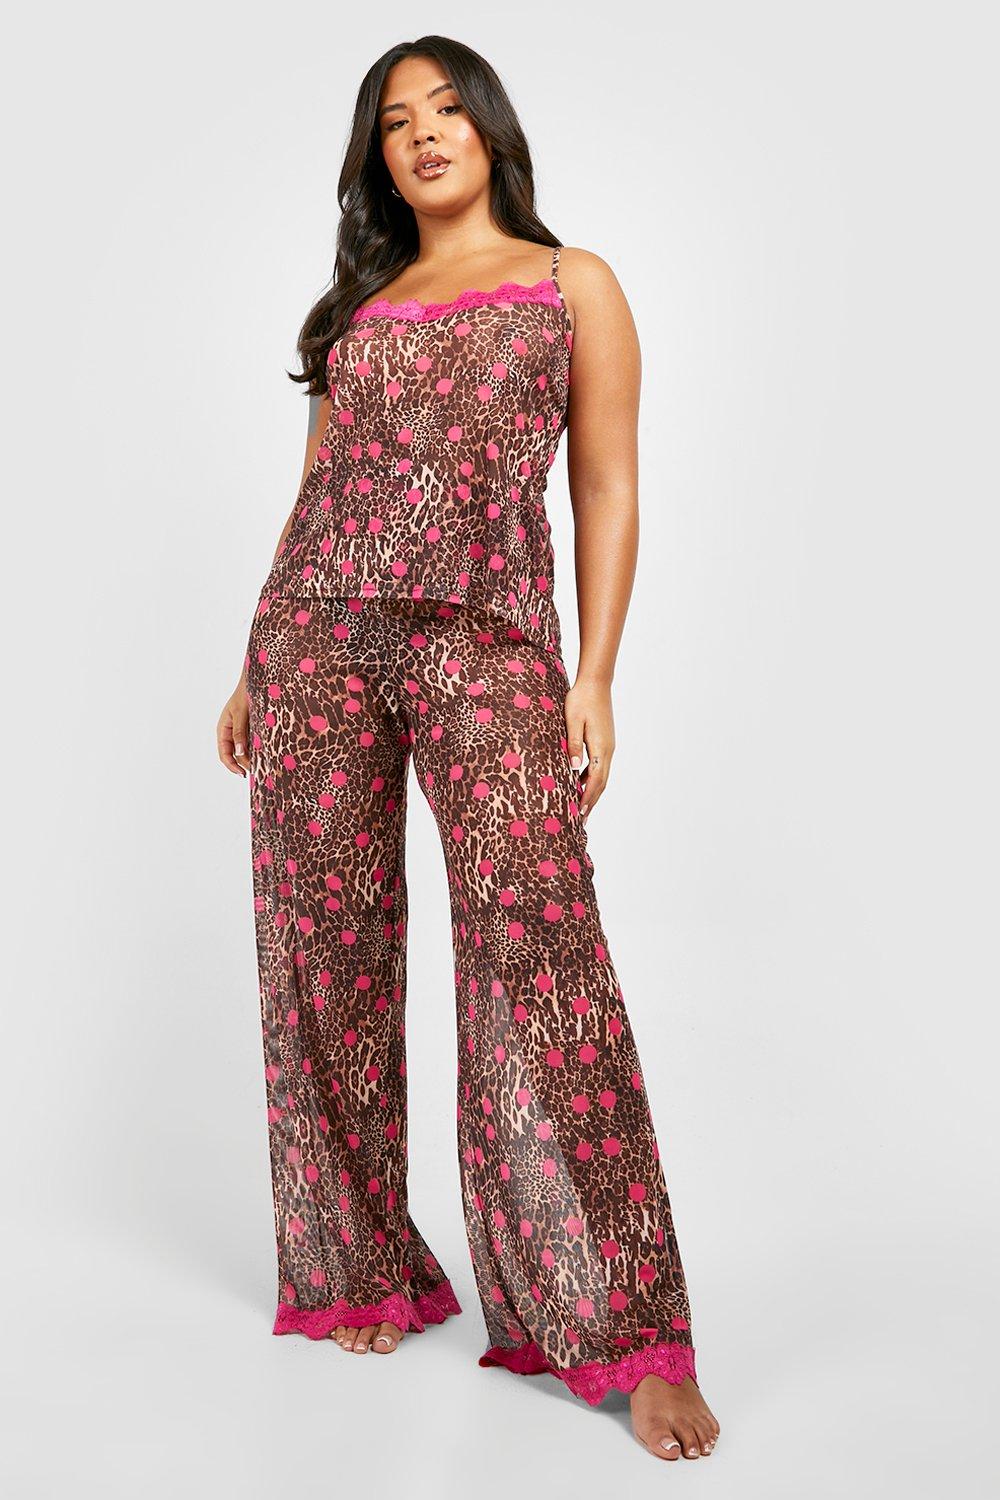 Women's Solid Color Camisole Top + Leopard Print Shorts Pajamas